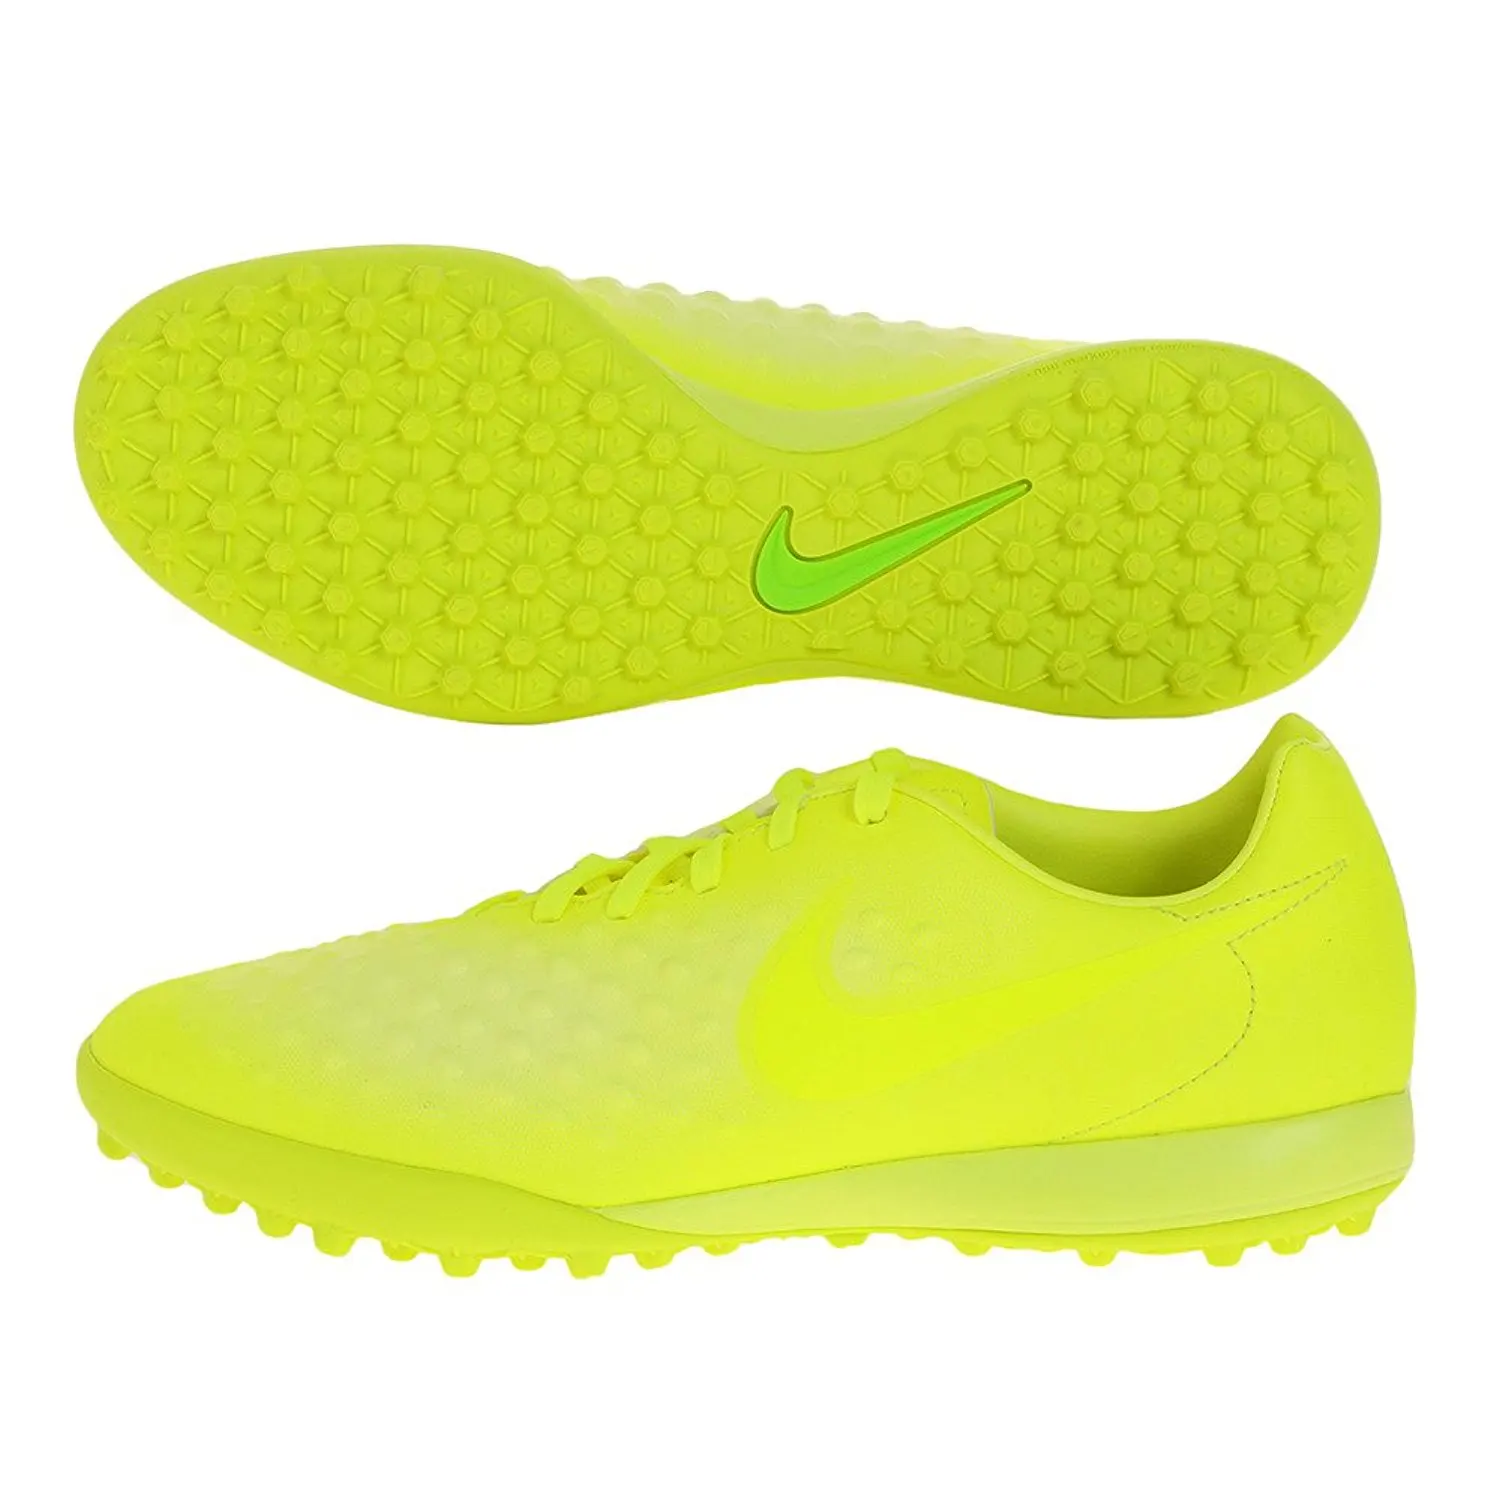 Buy Nike Mens Magista Onda II TF Turf Soccer Shoe in Cheap Price on